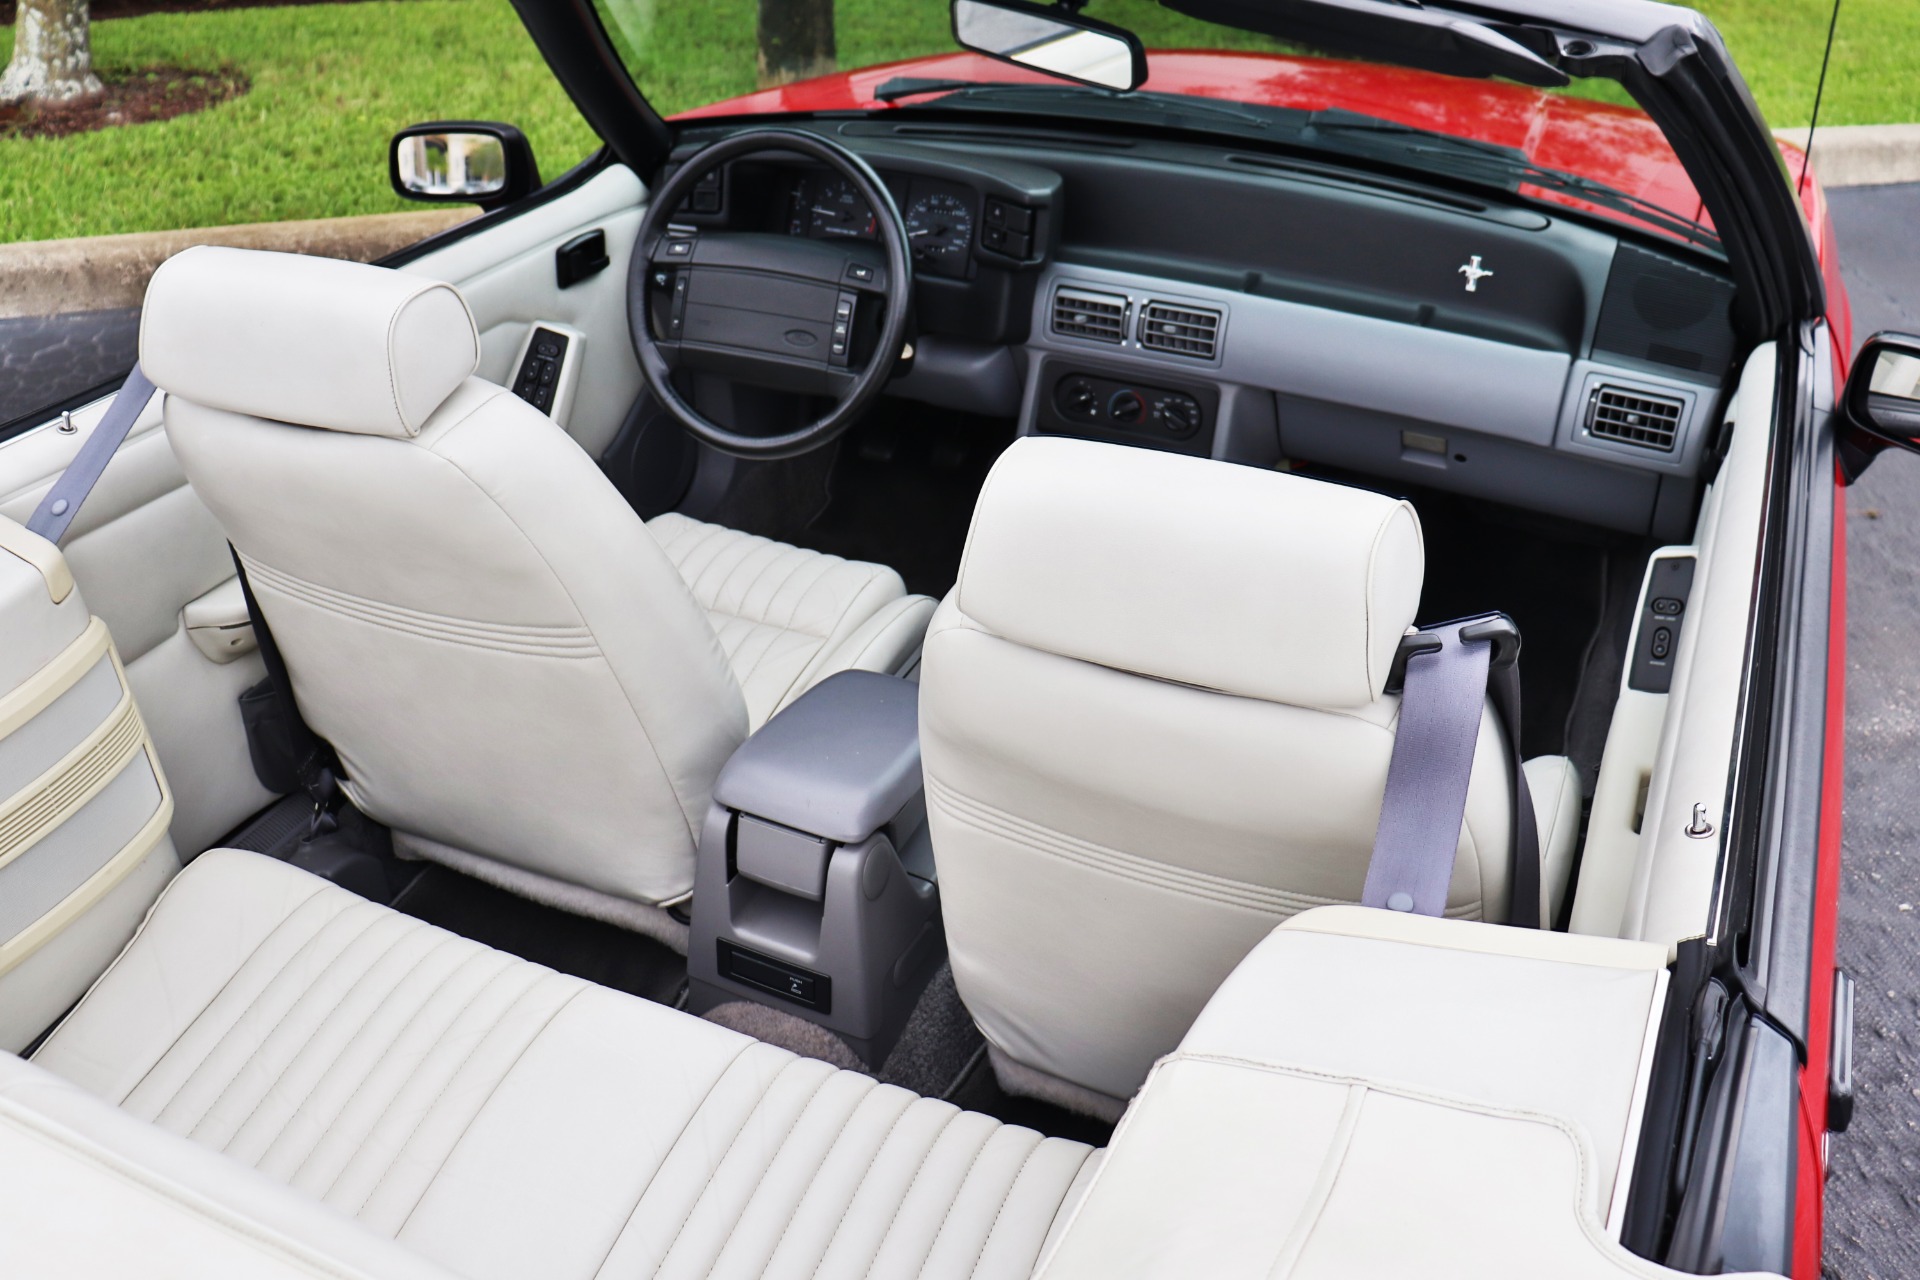 1993 mustang convertible interior